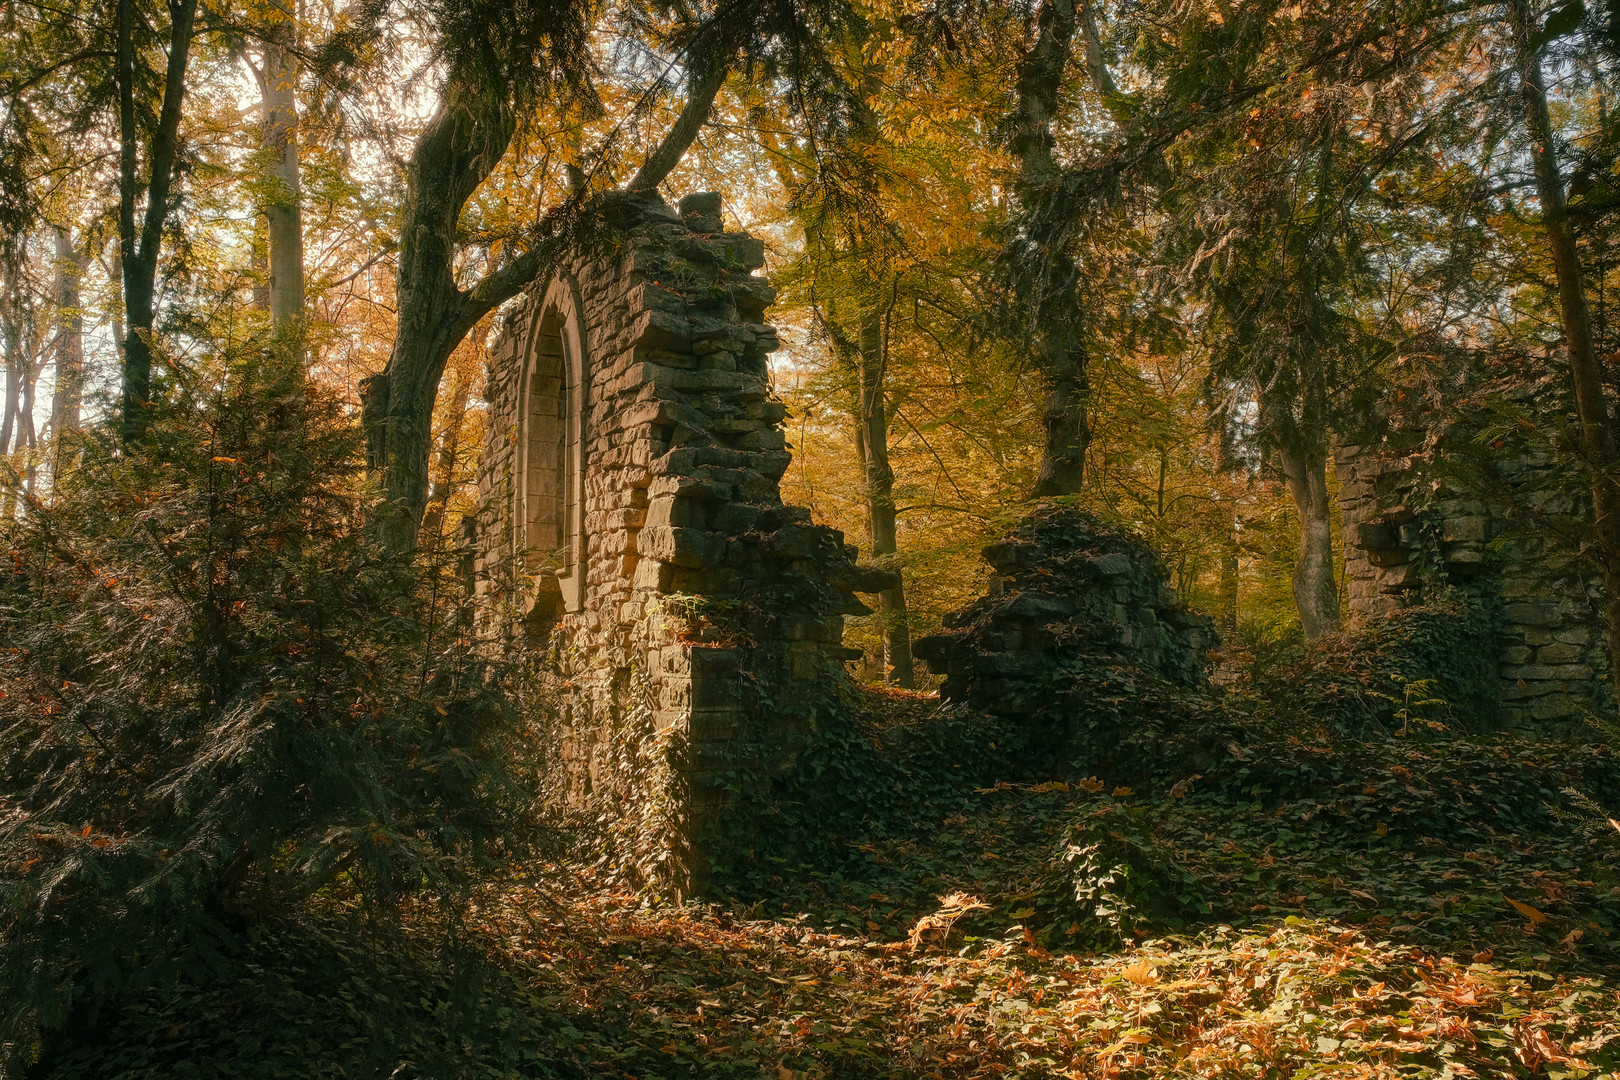 Ruins among the trees